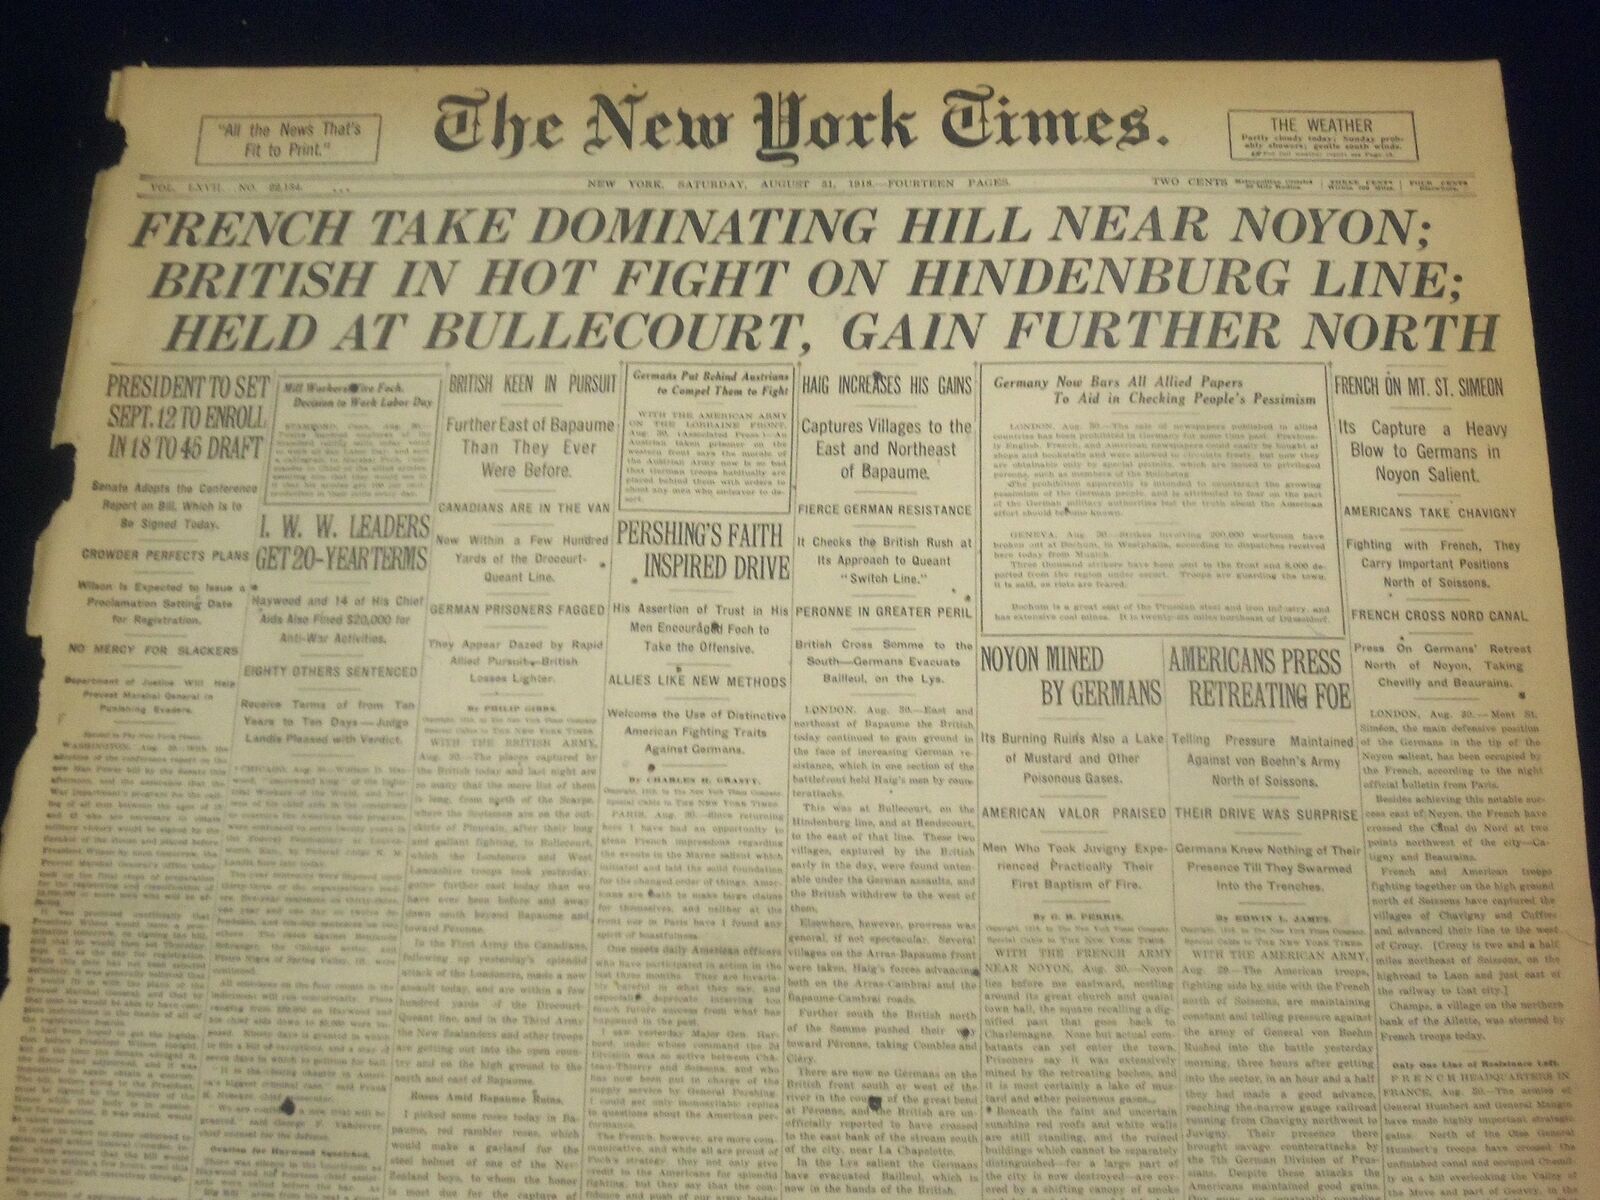 1918 AUGUST 31 NEW YORK TIMES - FRENCH TAKE HILL NEAR NOYON - NT 9195